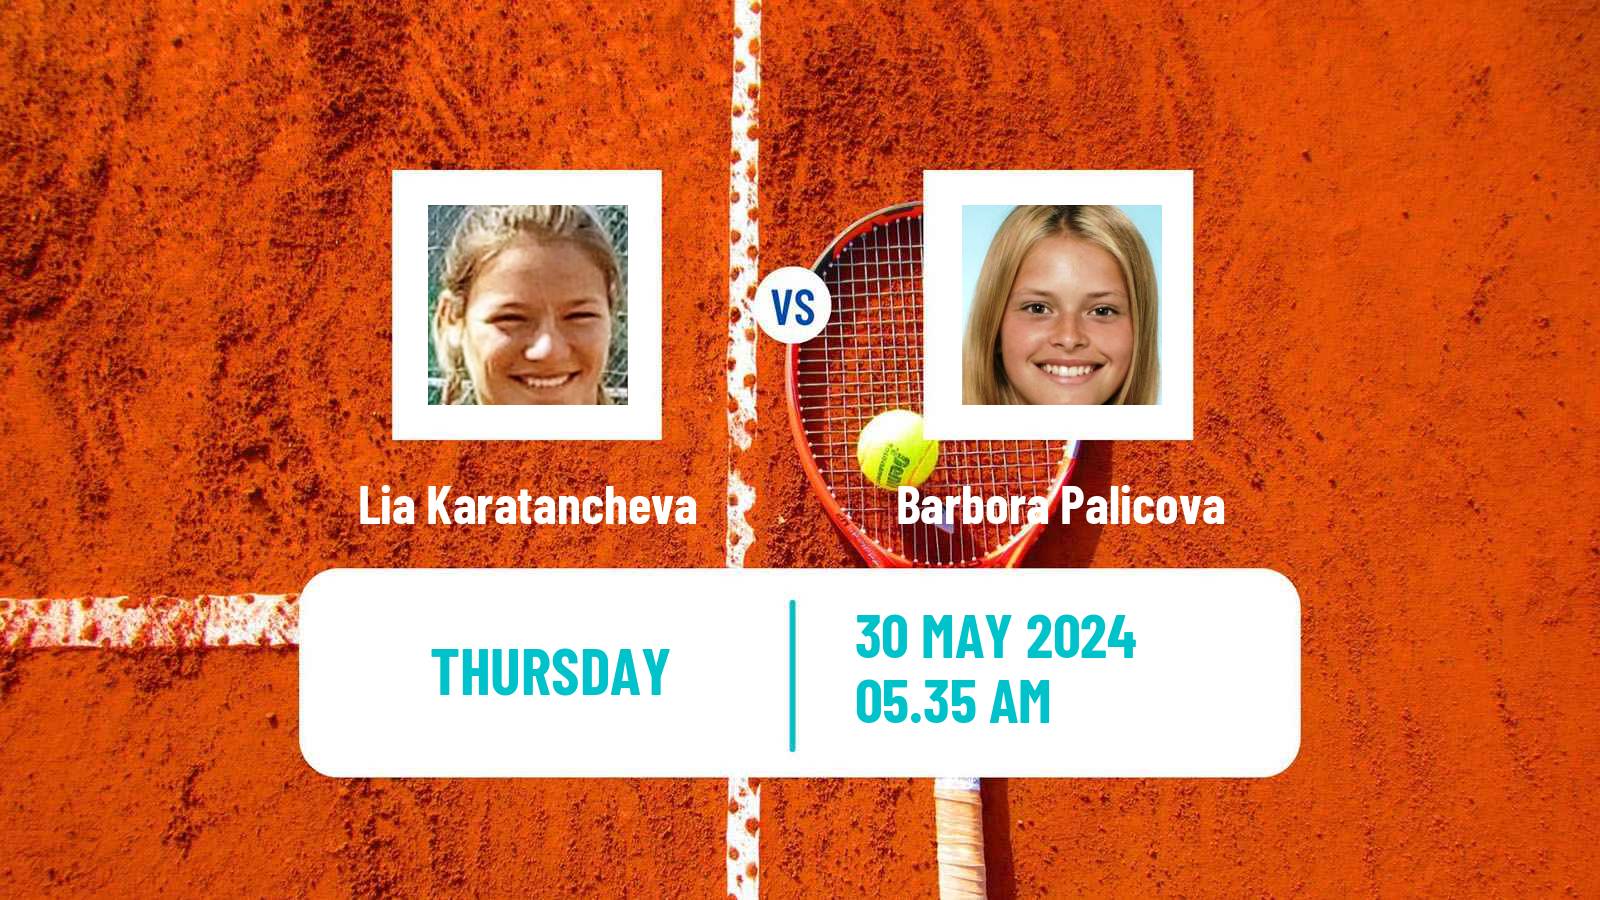 Tennis ITF W50 Otocec 2 Women Lia Karatancheva - Barbora Palicova